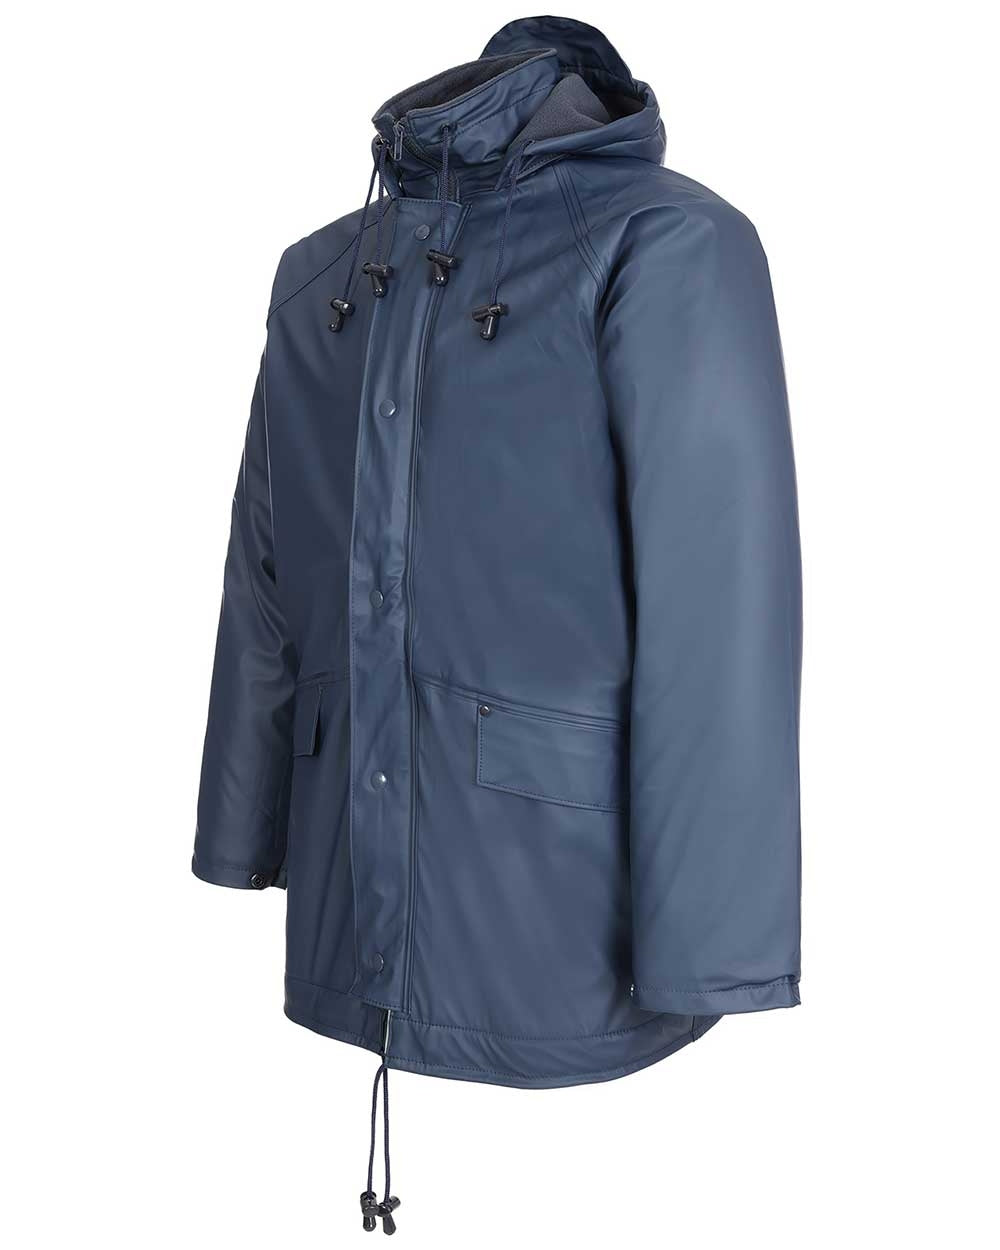 Navy Blue coloured Fort Fortex Flex Waterproof Fleece Lined Jacket on white background 